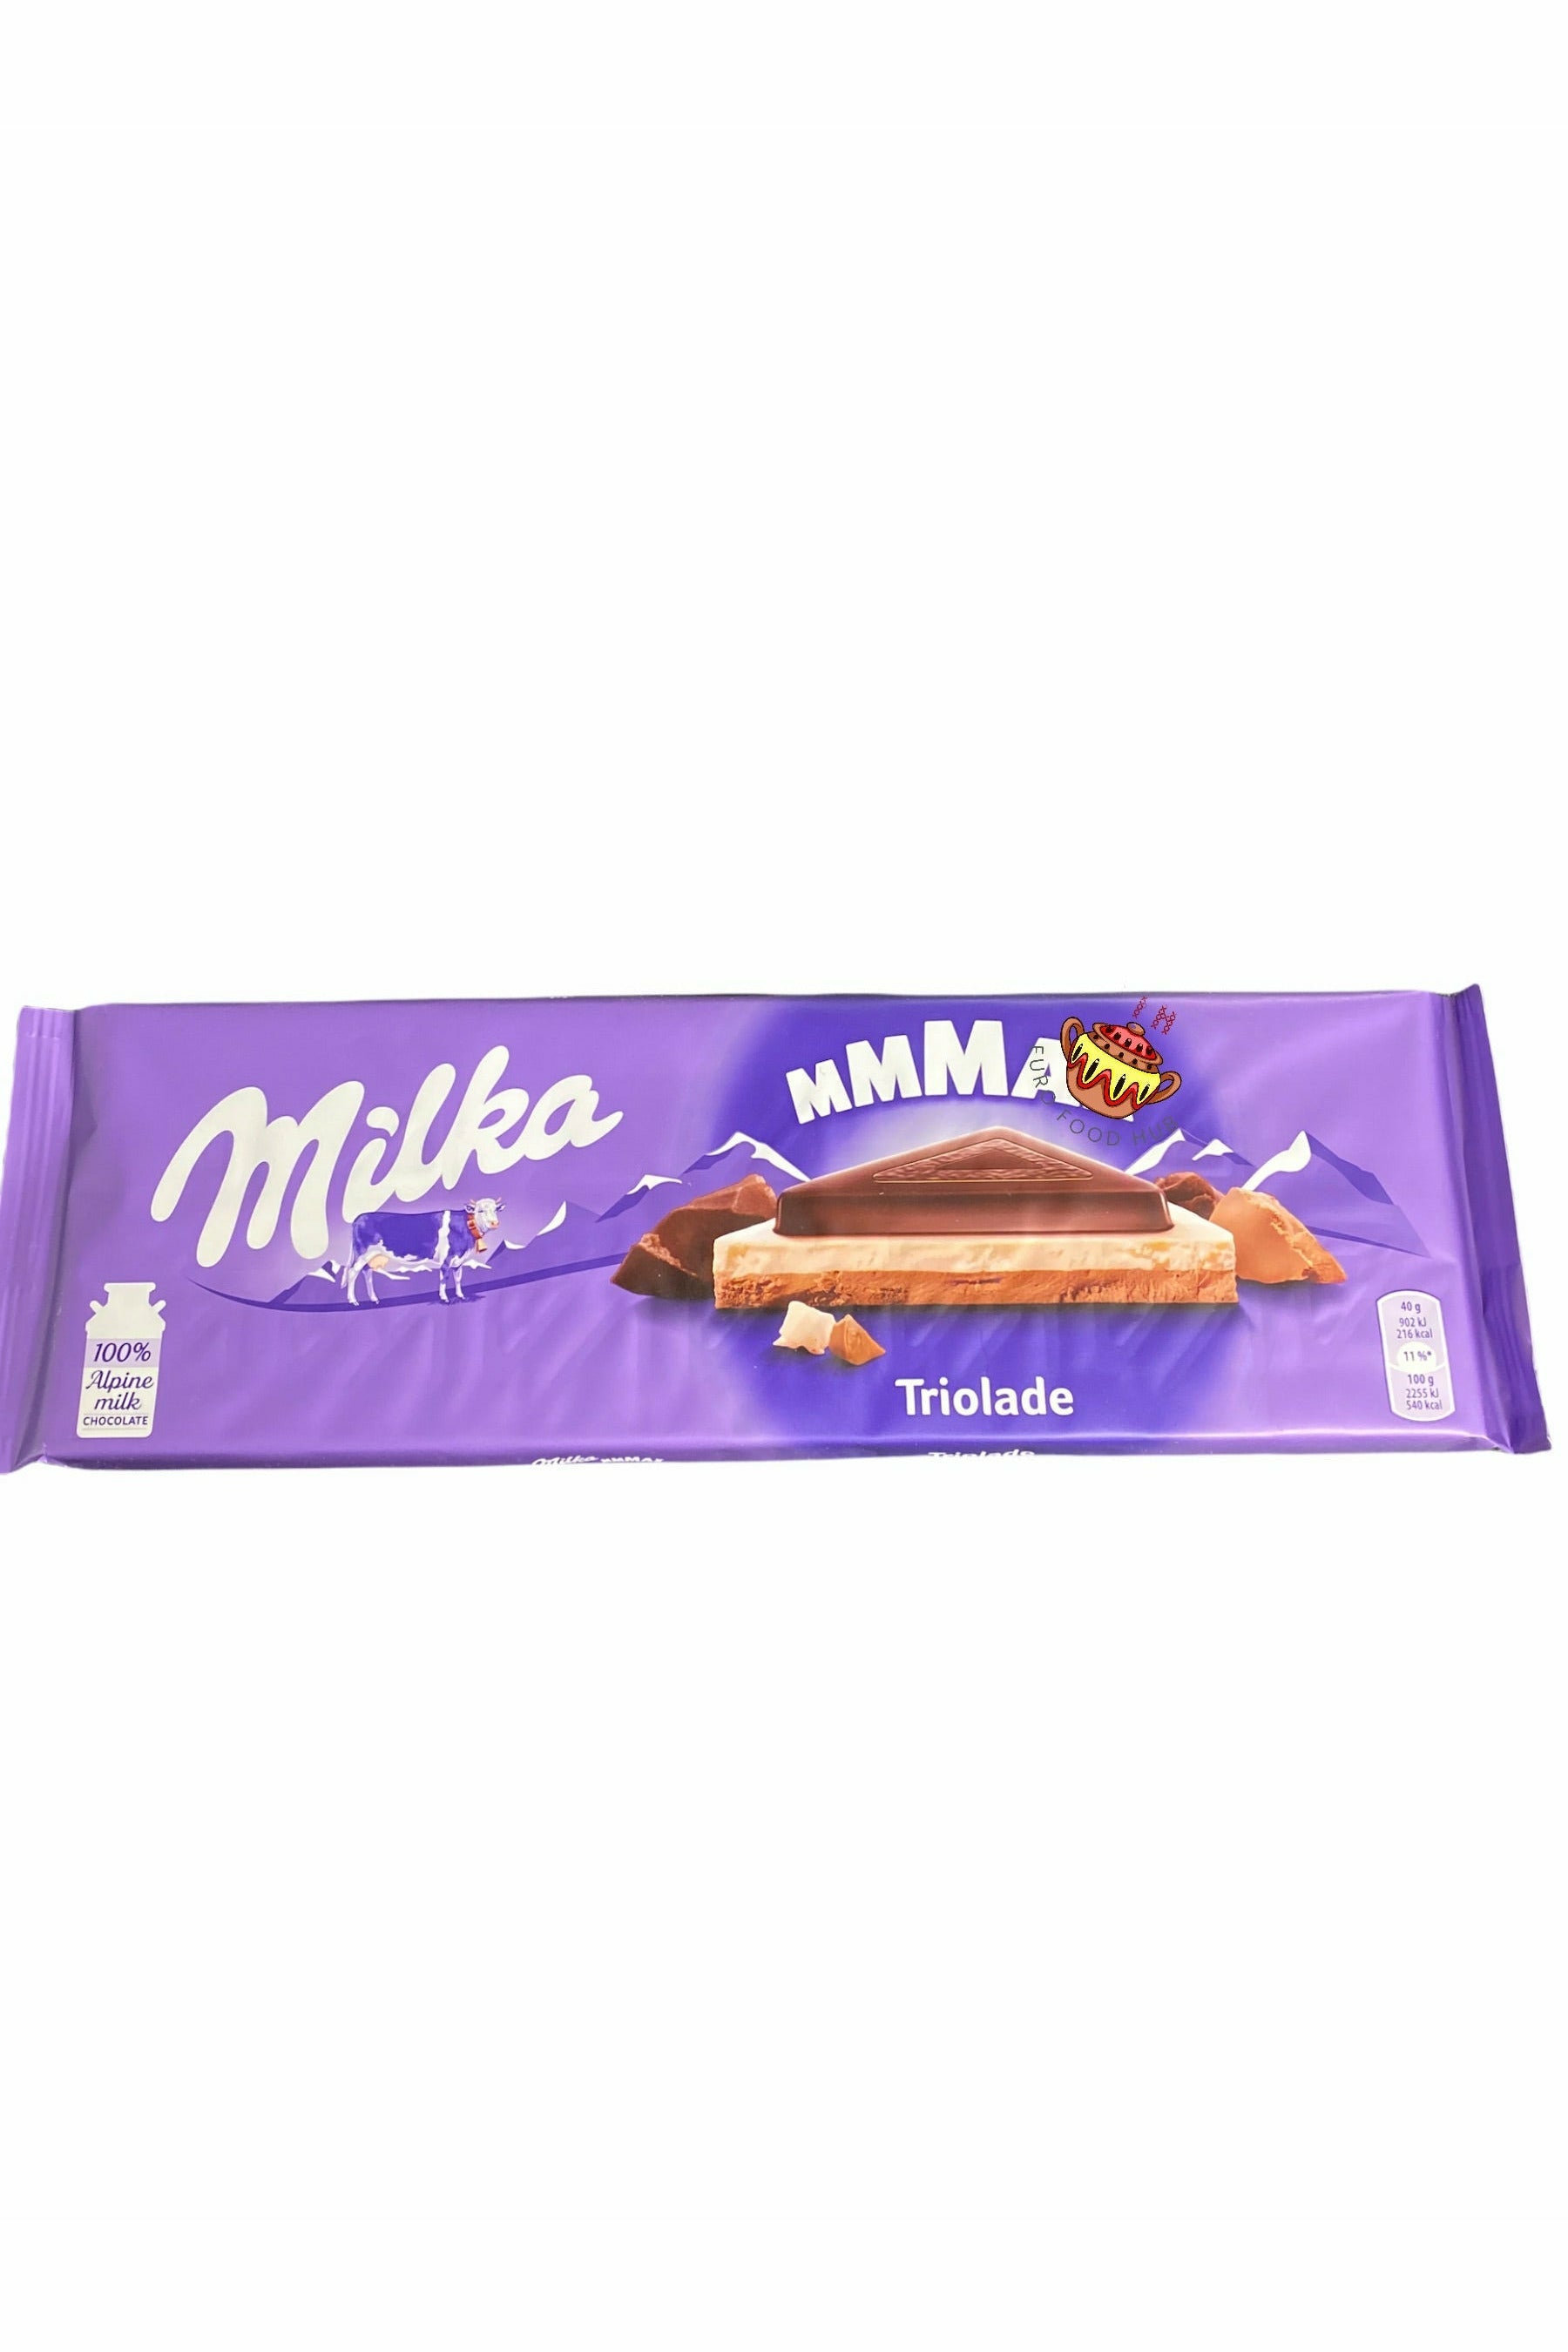 Milka Chocolate - Trioalde Max - 280g